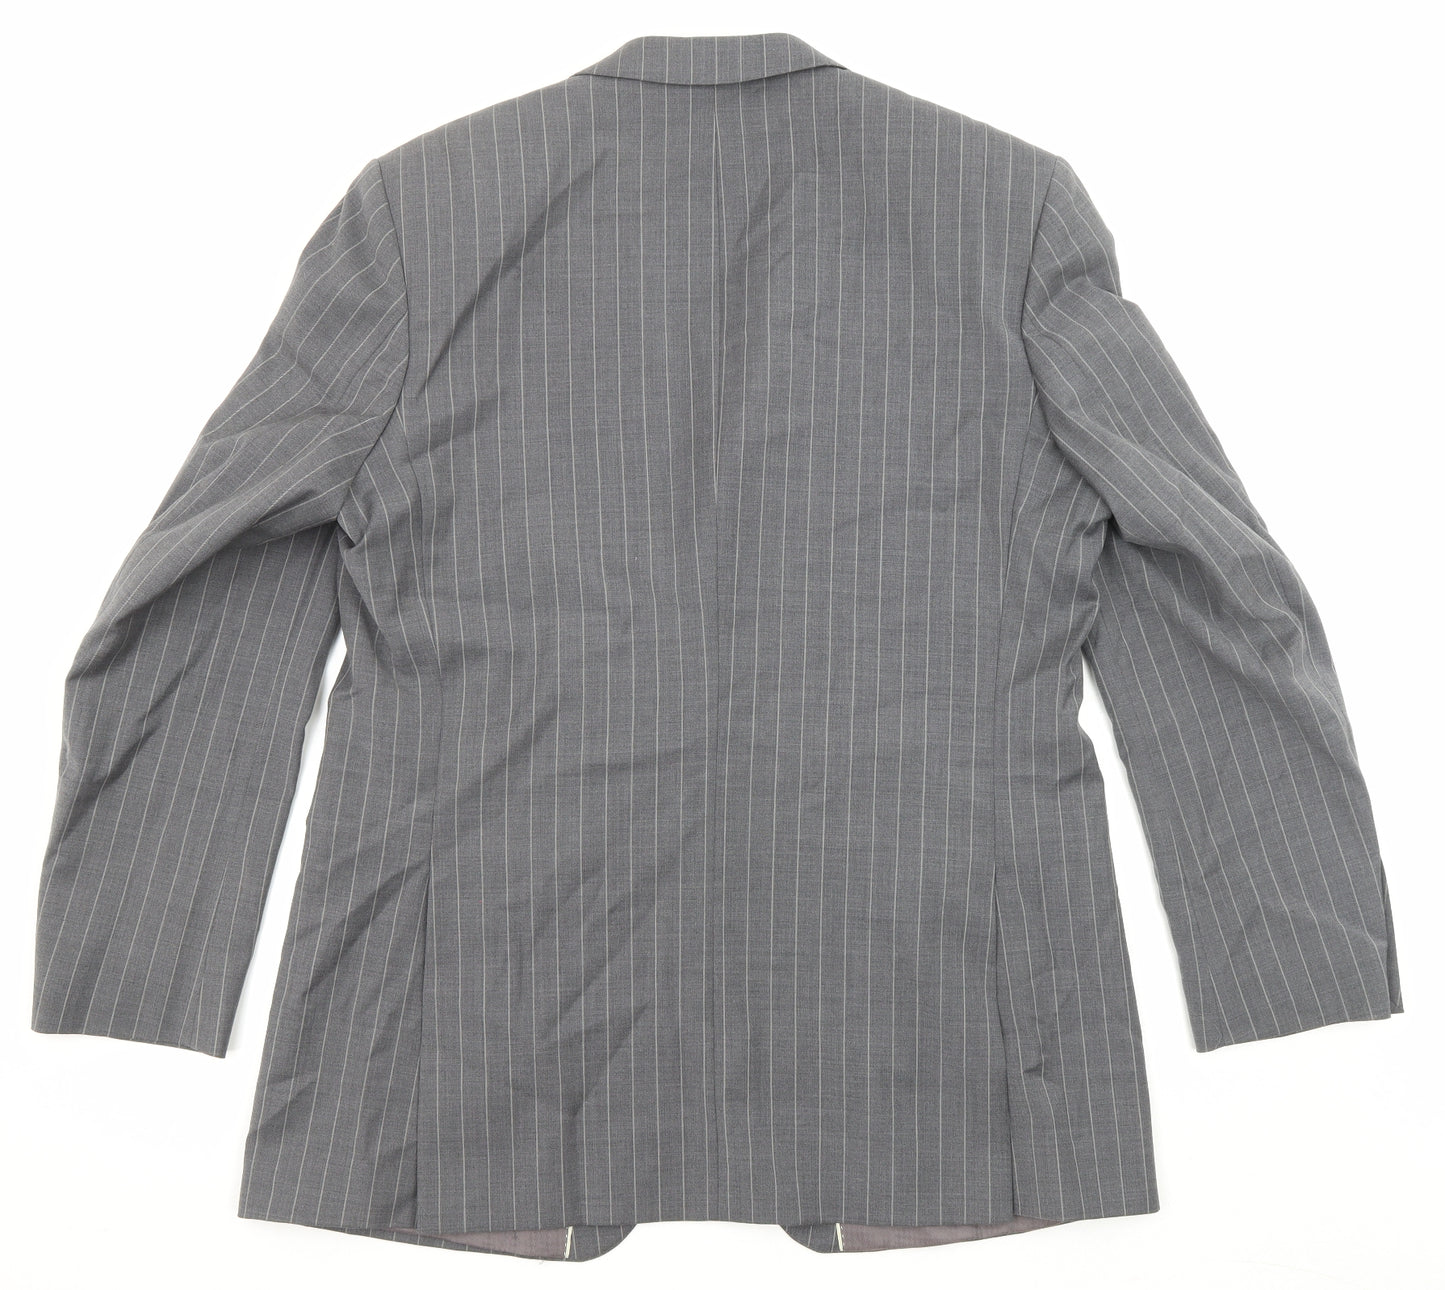 City Survival Mens Grey Striped Polyester Jacket Suit Jacket Size 44 Regular